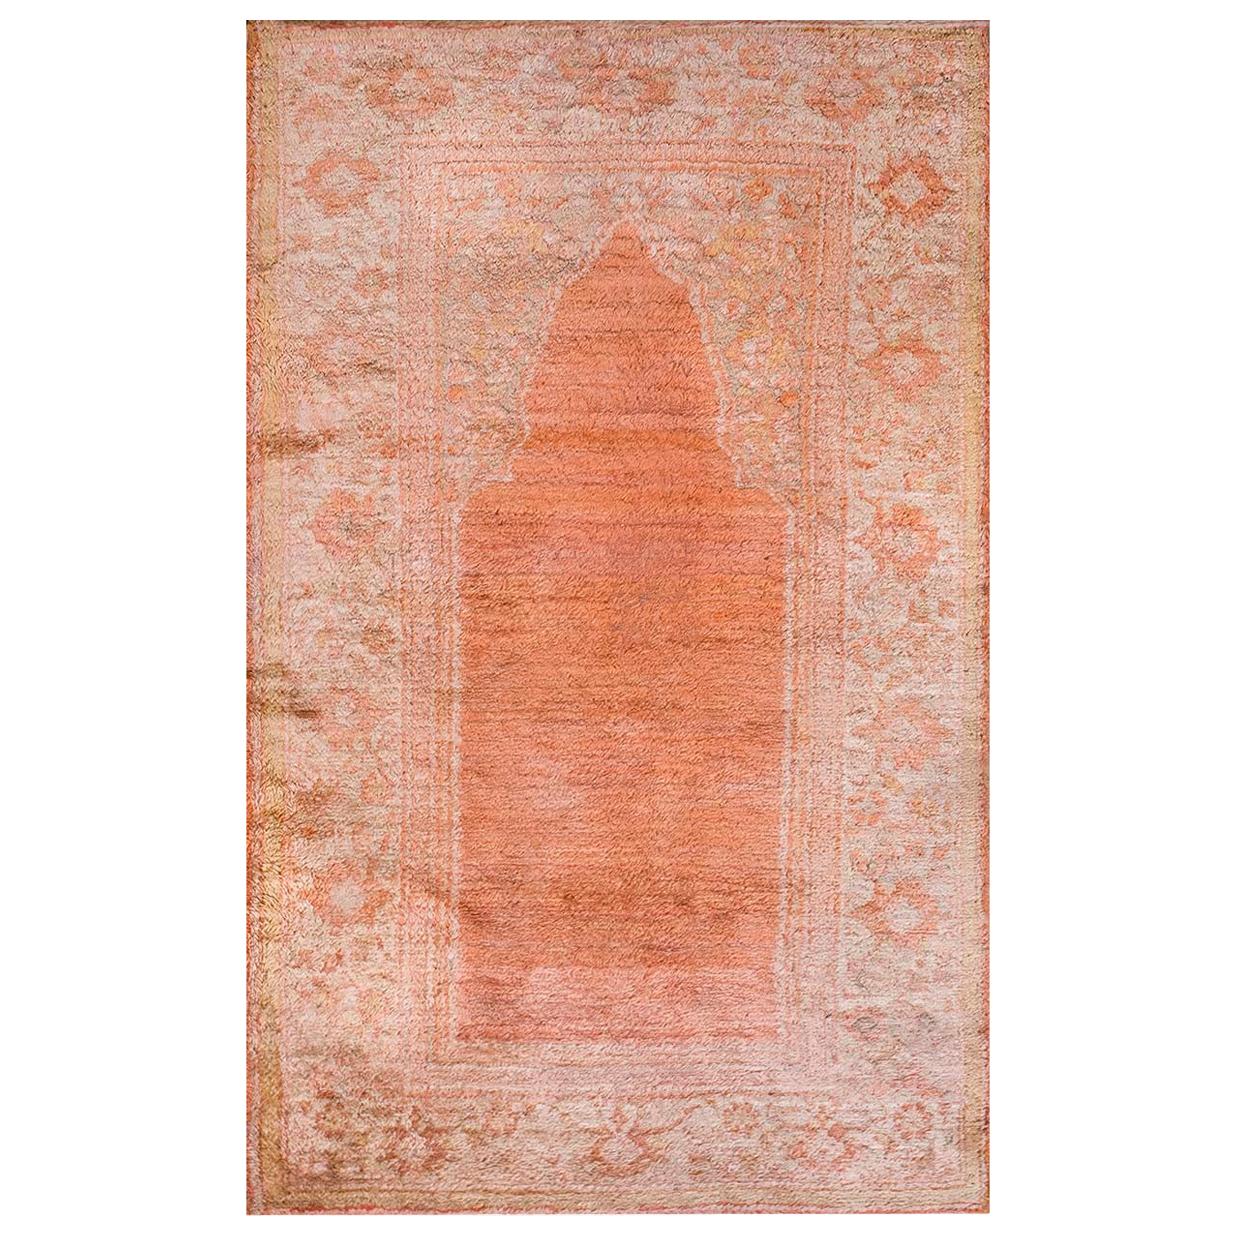 19th Century Turkish Angora Oushak Prayer Rug ( 3'10" x 5'10" - 117 x 178 ) For Sale